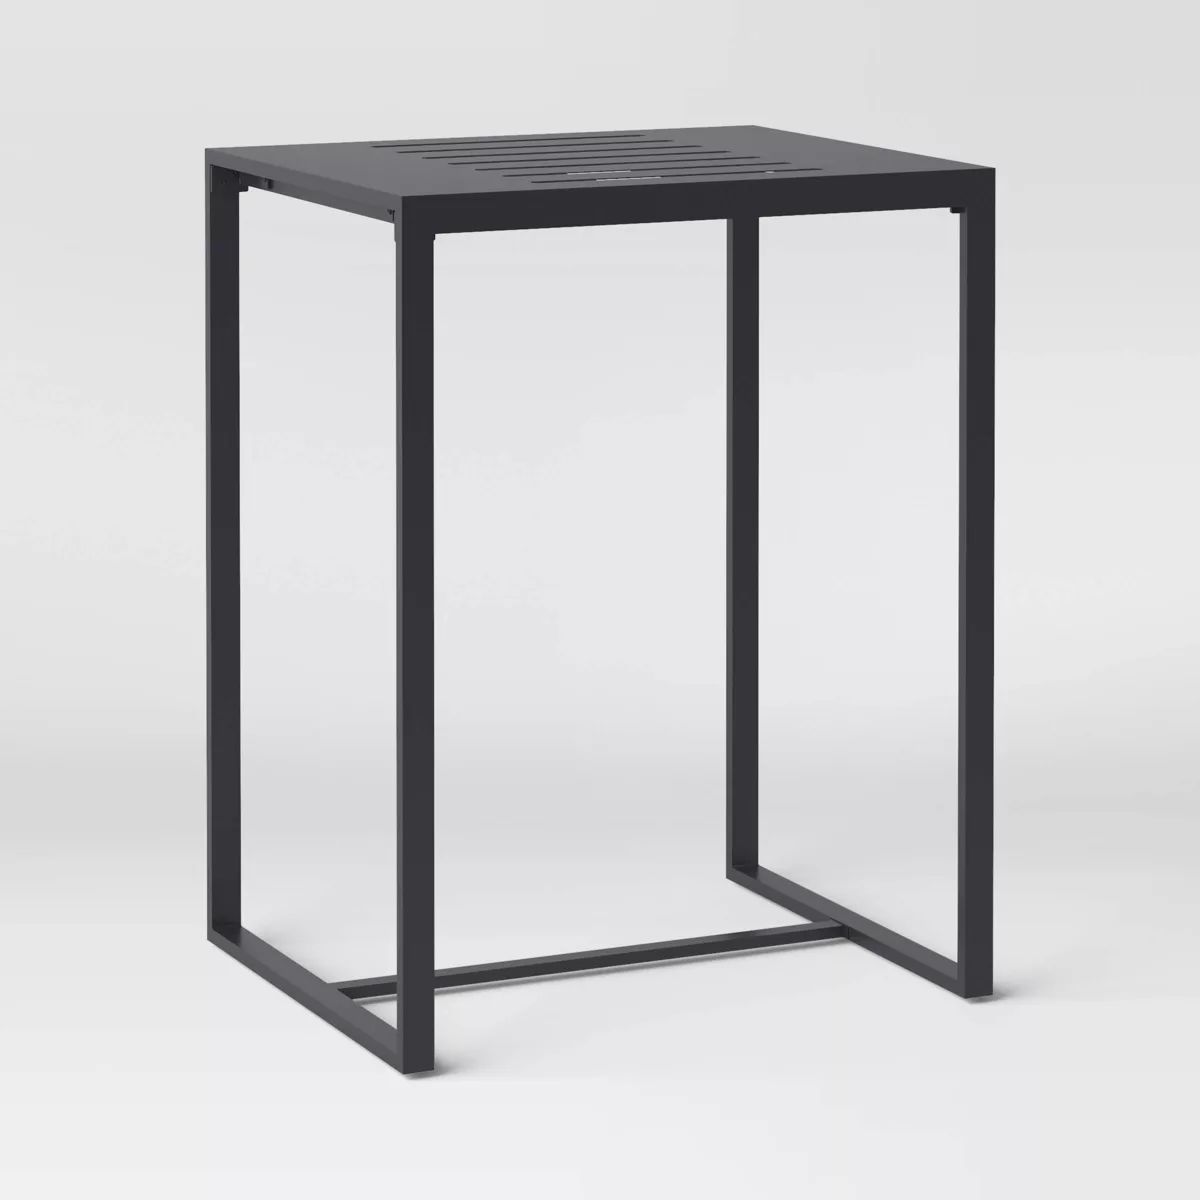 Henning Bar Height Rectangle Patio Table - Black - Threshold™ | Target